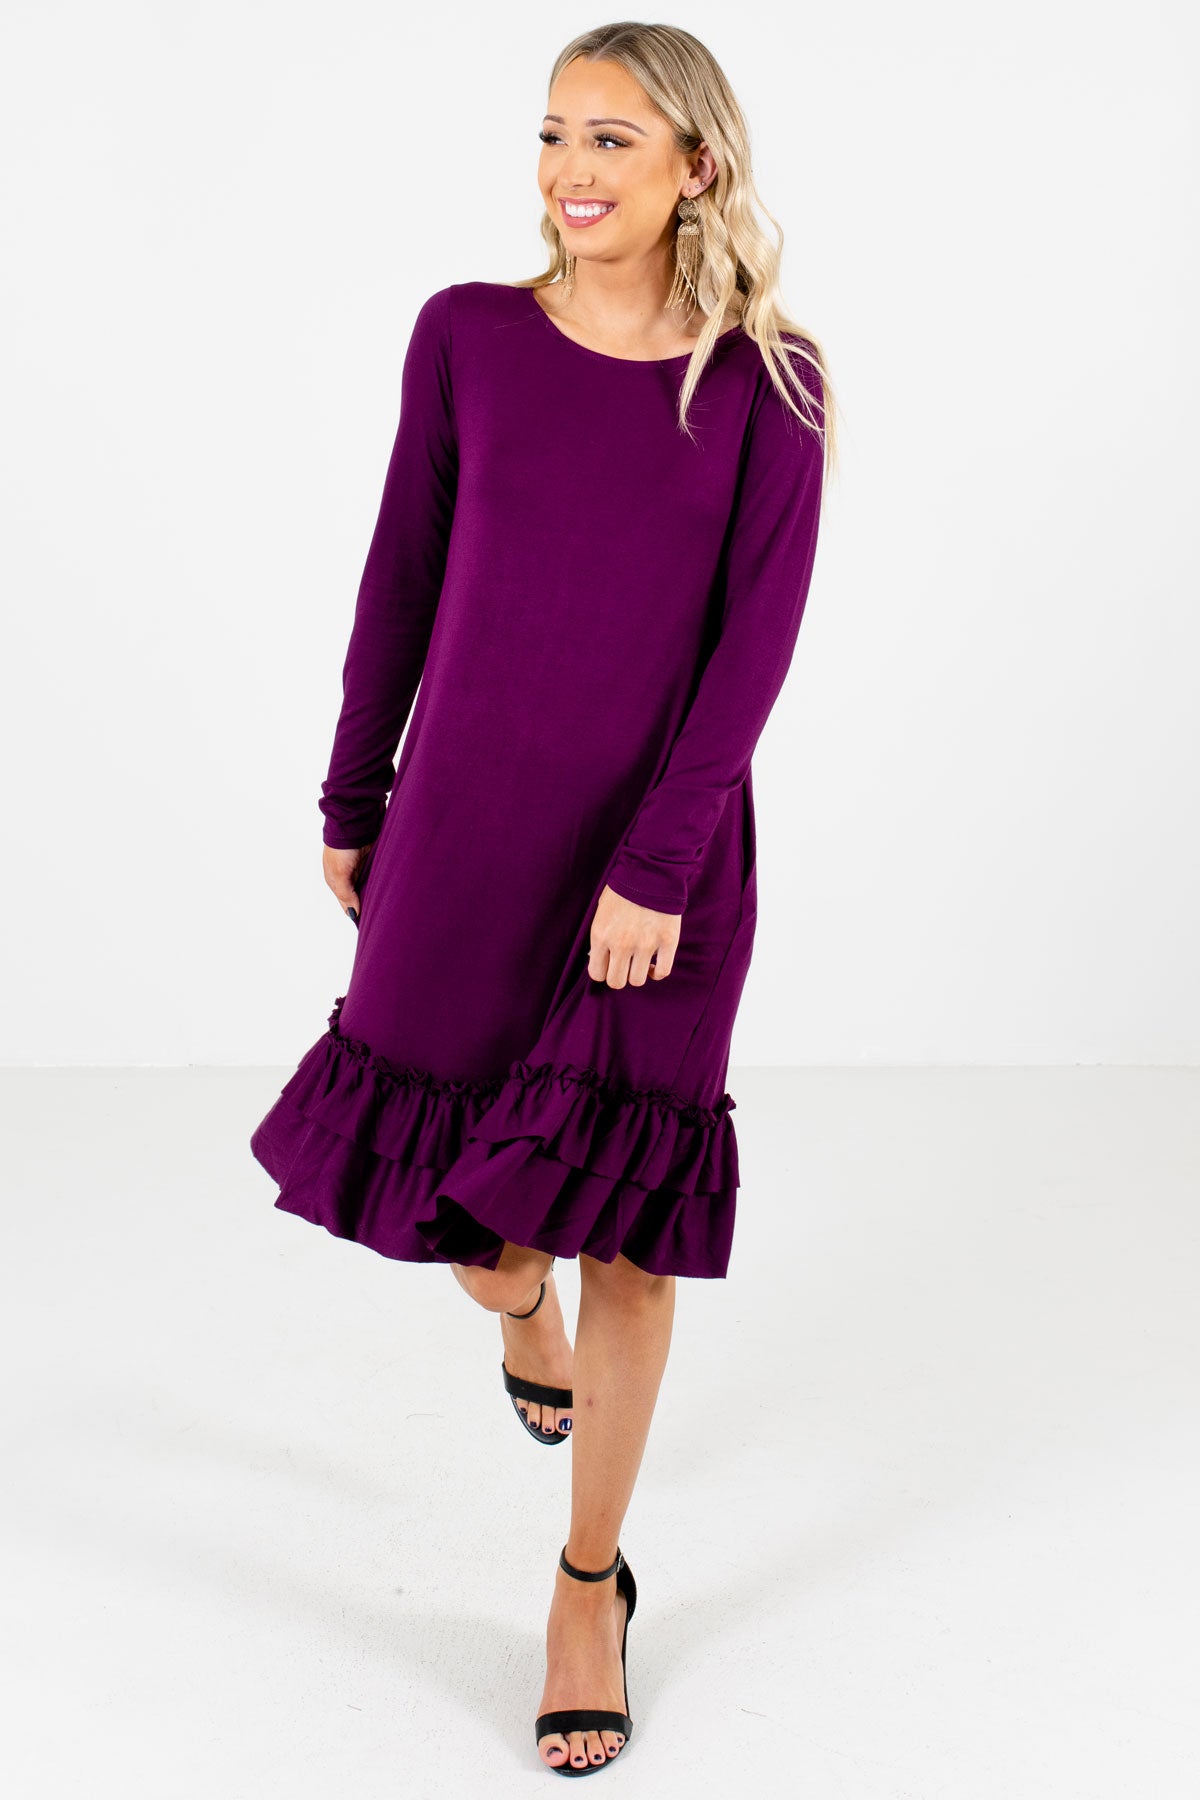 Women's Purple High-Quality Boutique Knee-Length Dresses